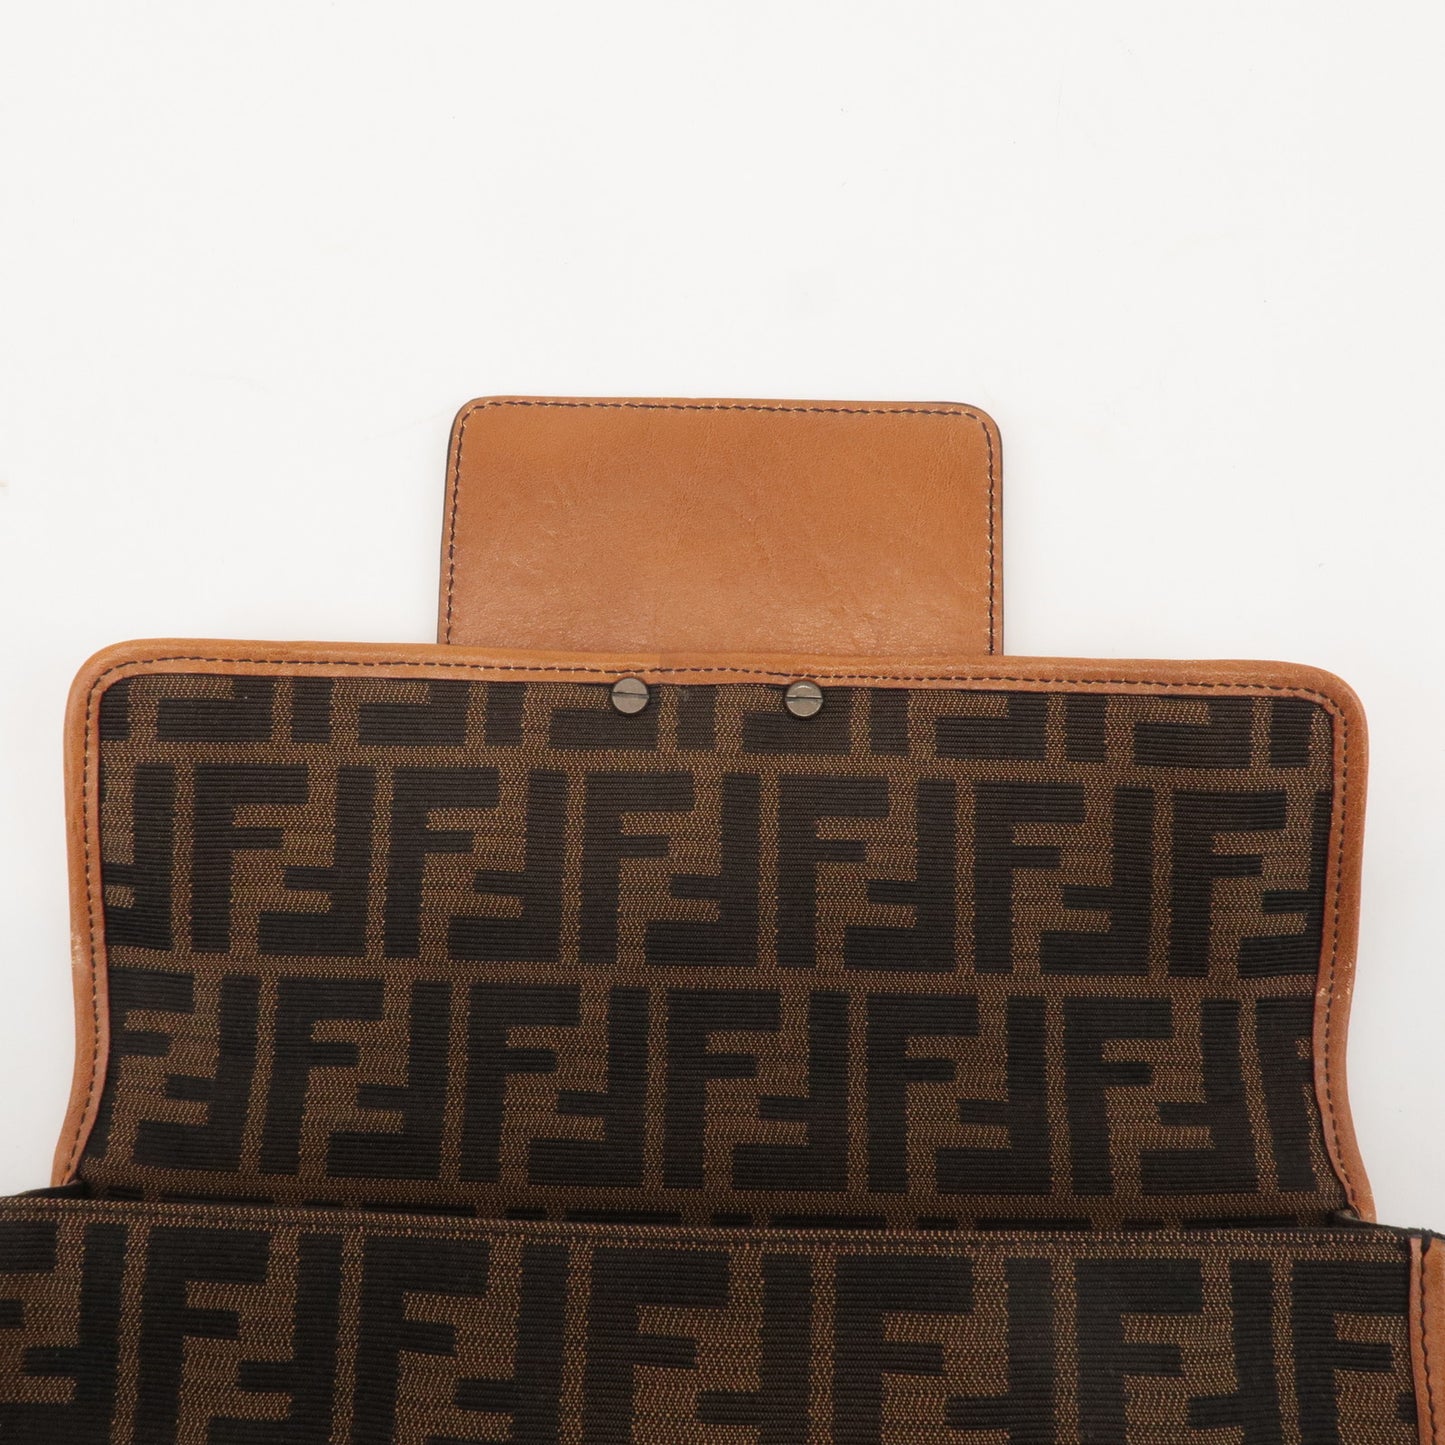 FENDI Zucca Canvas Leather Shoulder Bag Khaki Black Brown 8BR553